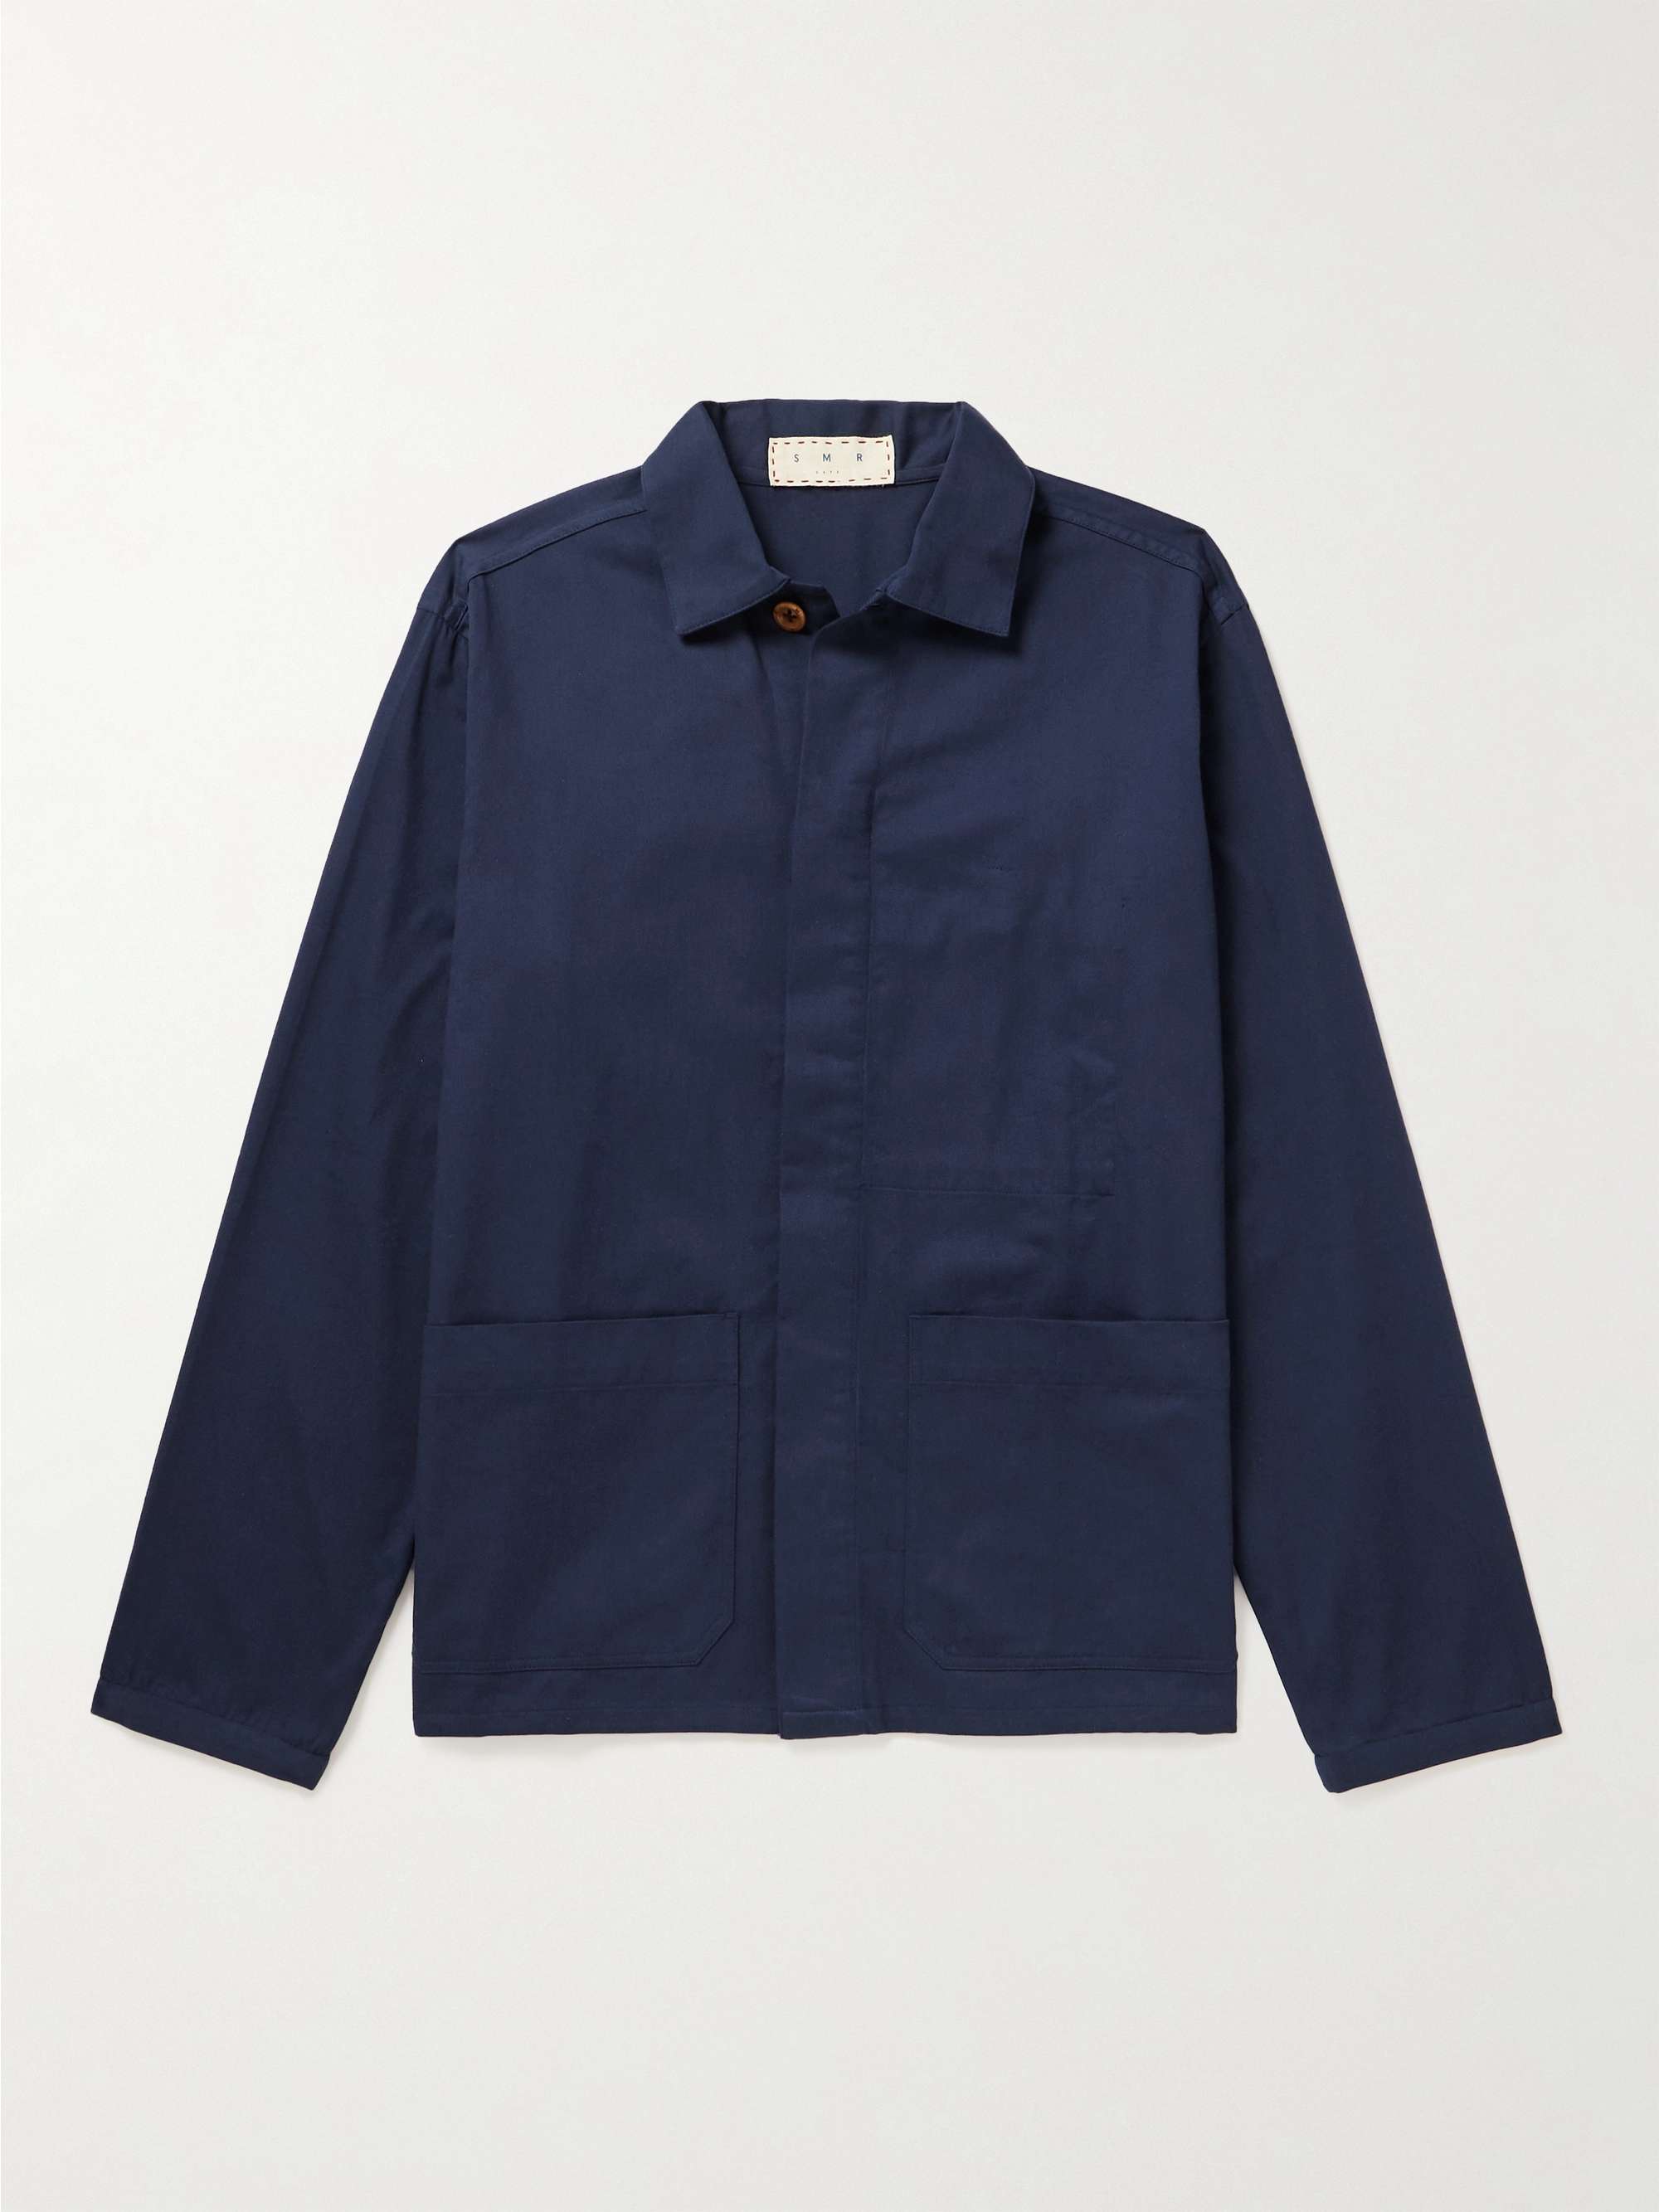 SMR DAYS Arpoador Printed Linen Shirt Jacket for Men | MR PORTER